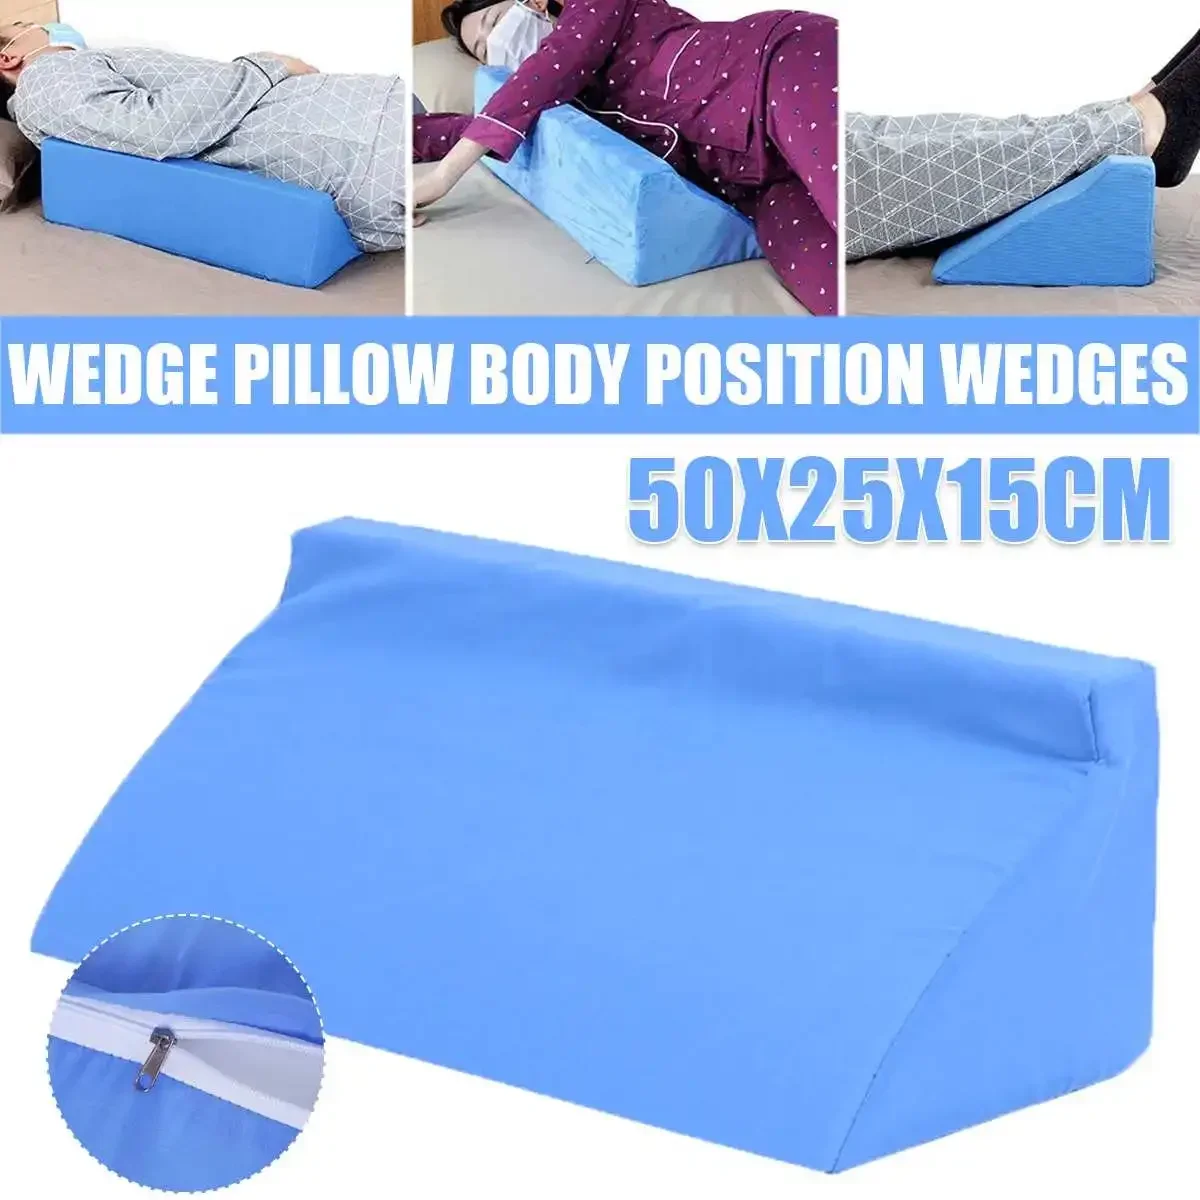 

New Orthopedic Acid Reflux Bed Wedge Pillow Large Size Sponge Cotton Back Leg Elevation Cushion Pad Bedding Zipper Wedge Pillow